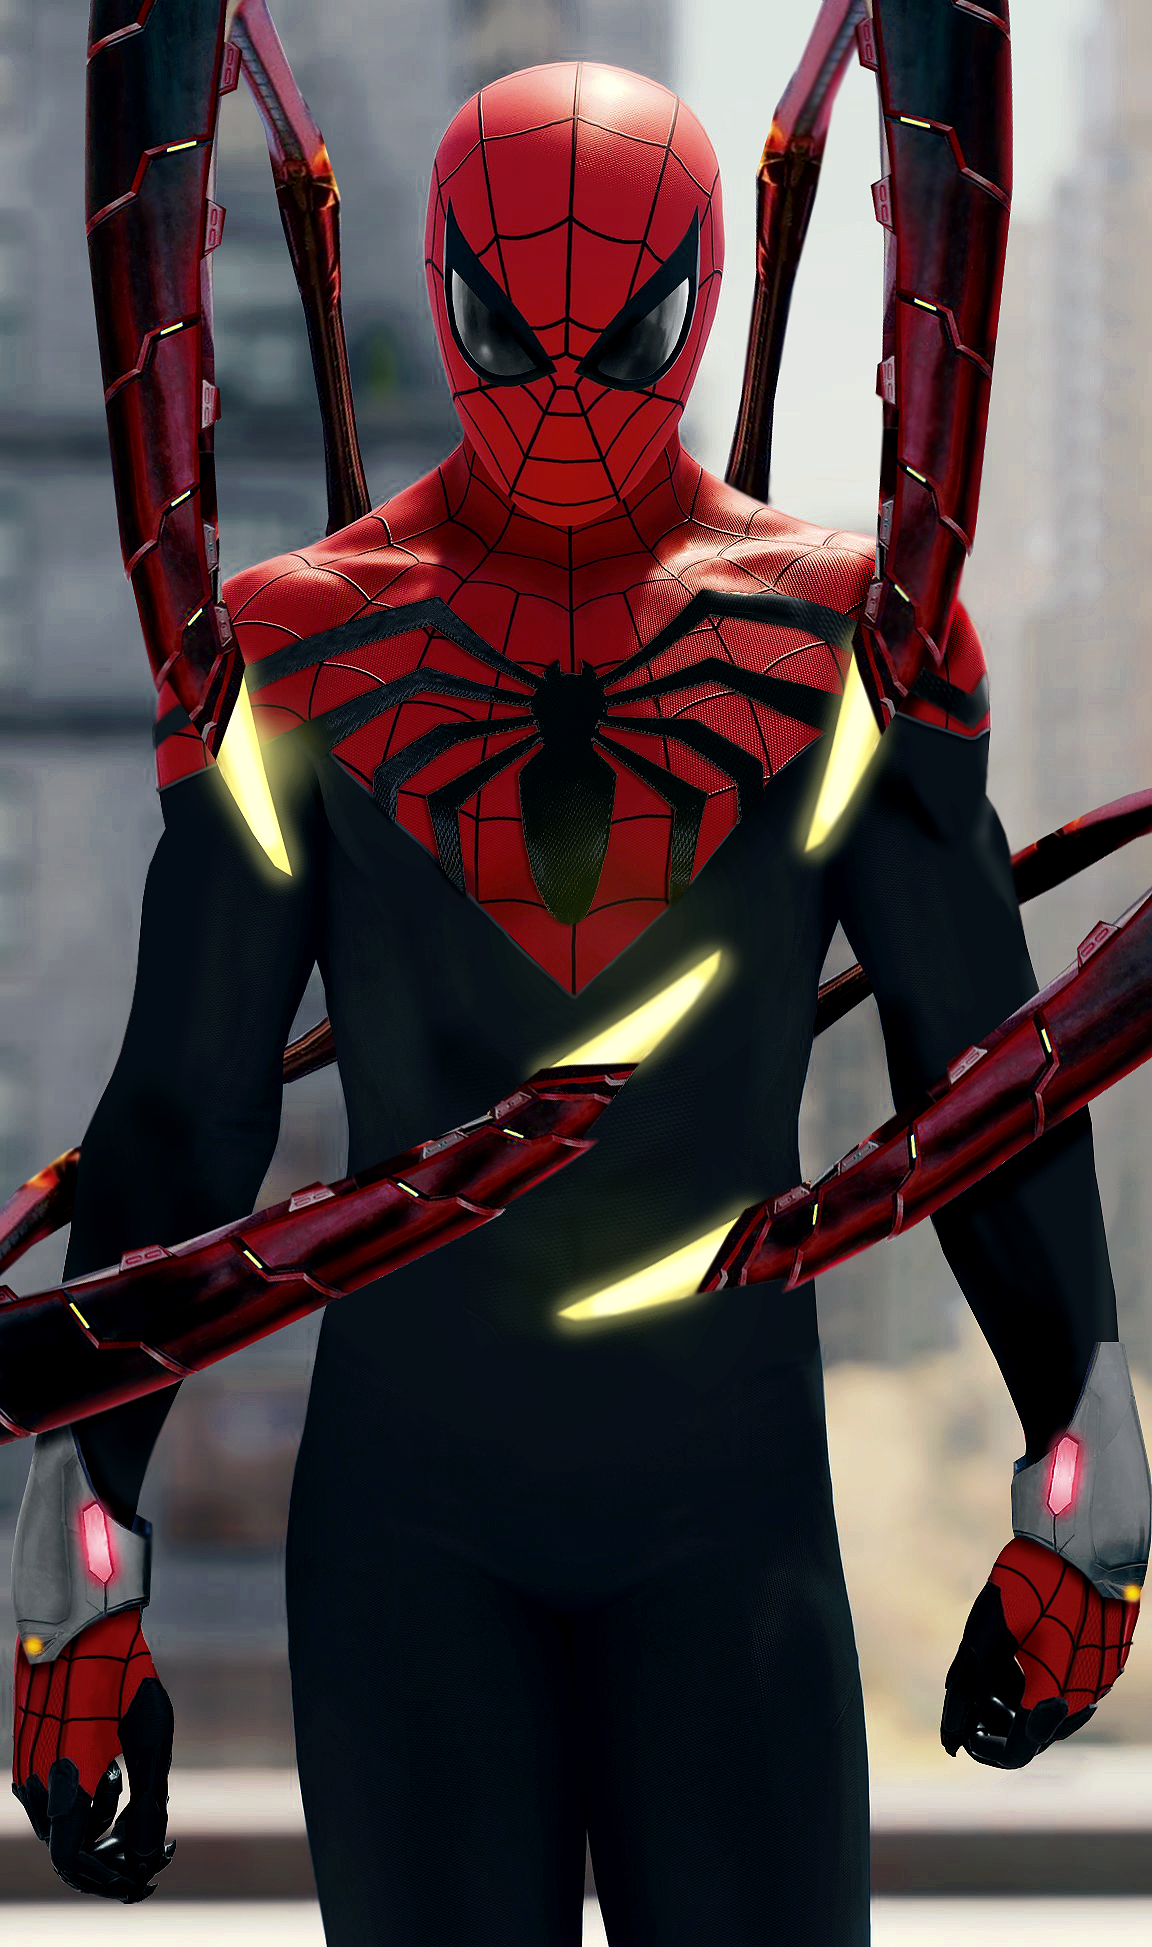 Superior Spider-Man PS4 by Soyelmejor999 on DeviantArt